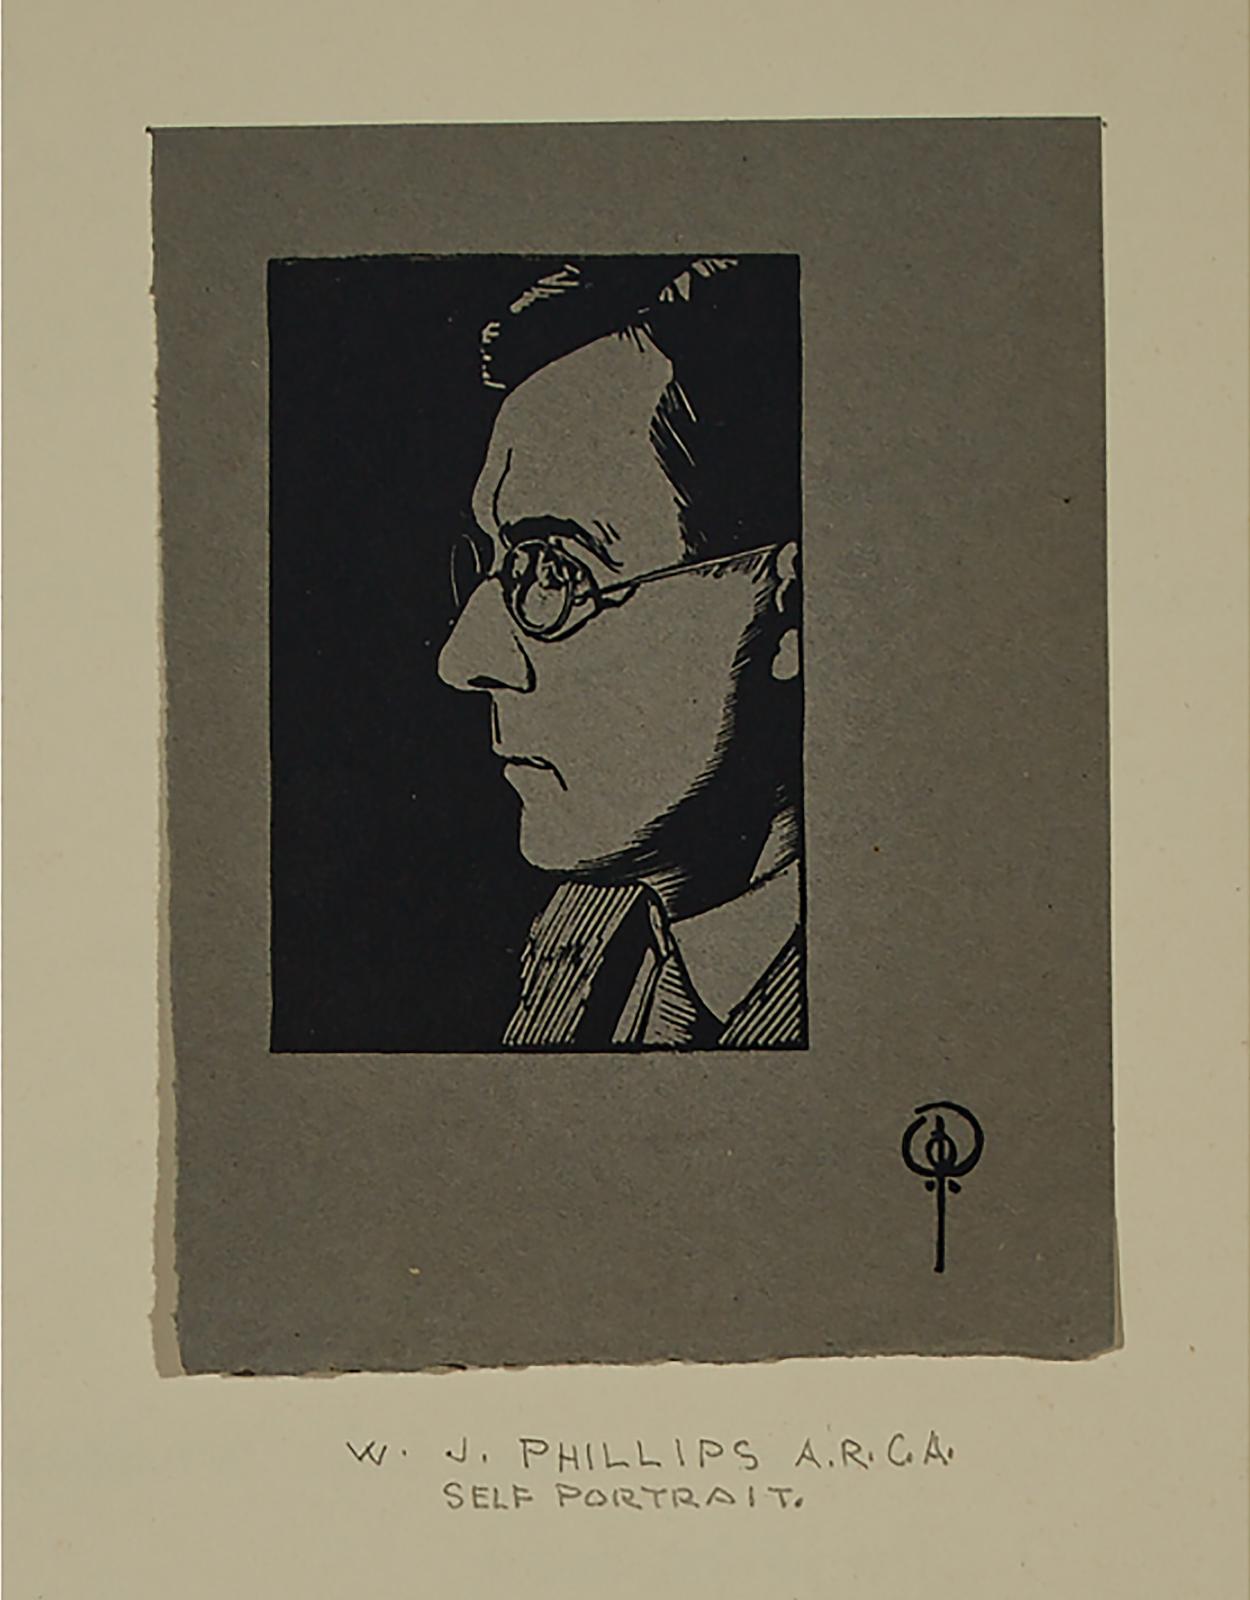 Walter Joseph (W.J.) Phillips (1884-1963) - Self Portrait, 1922